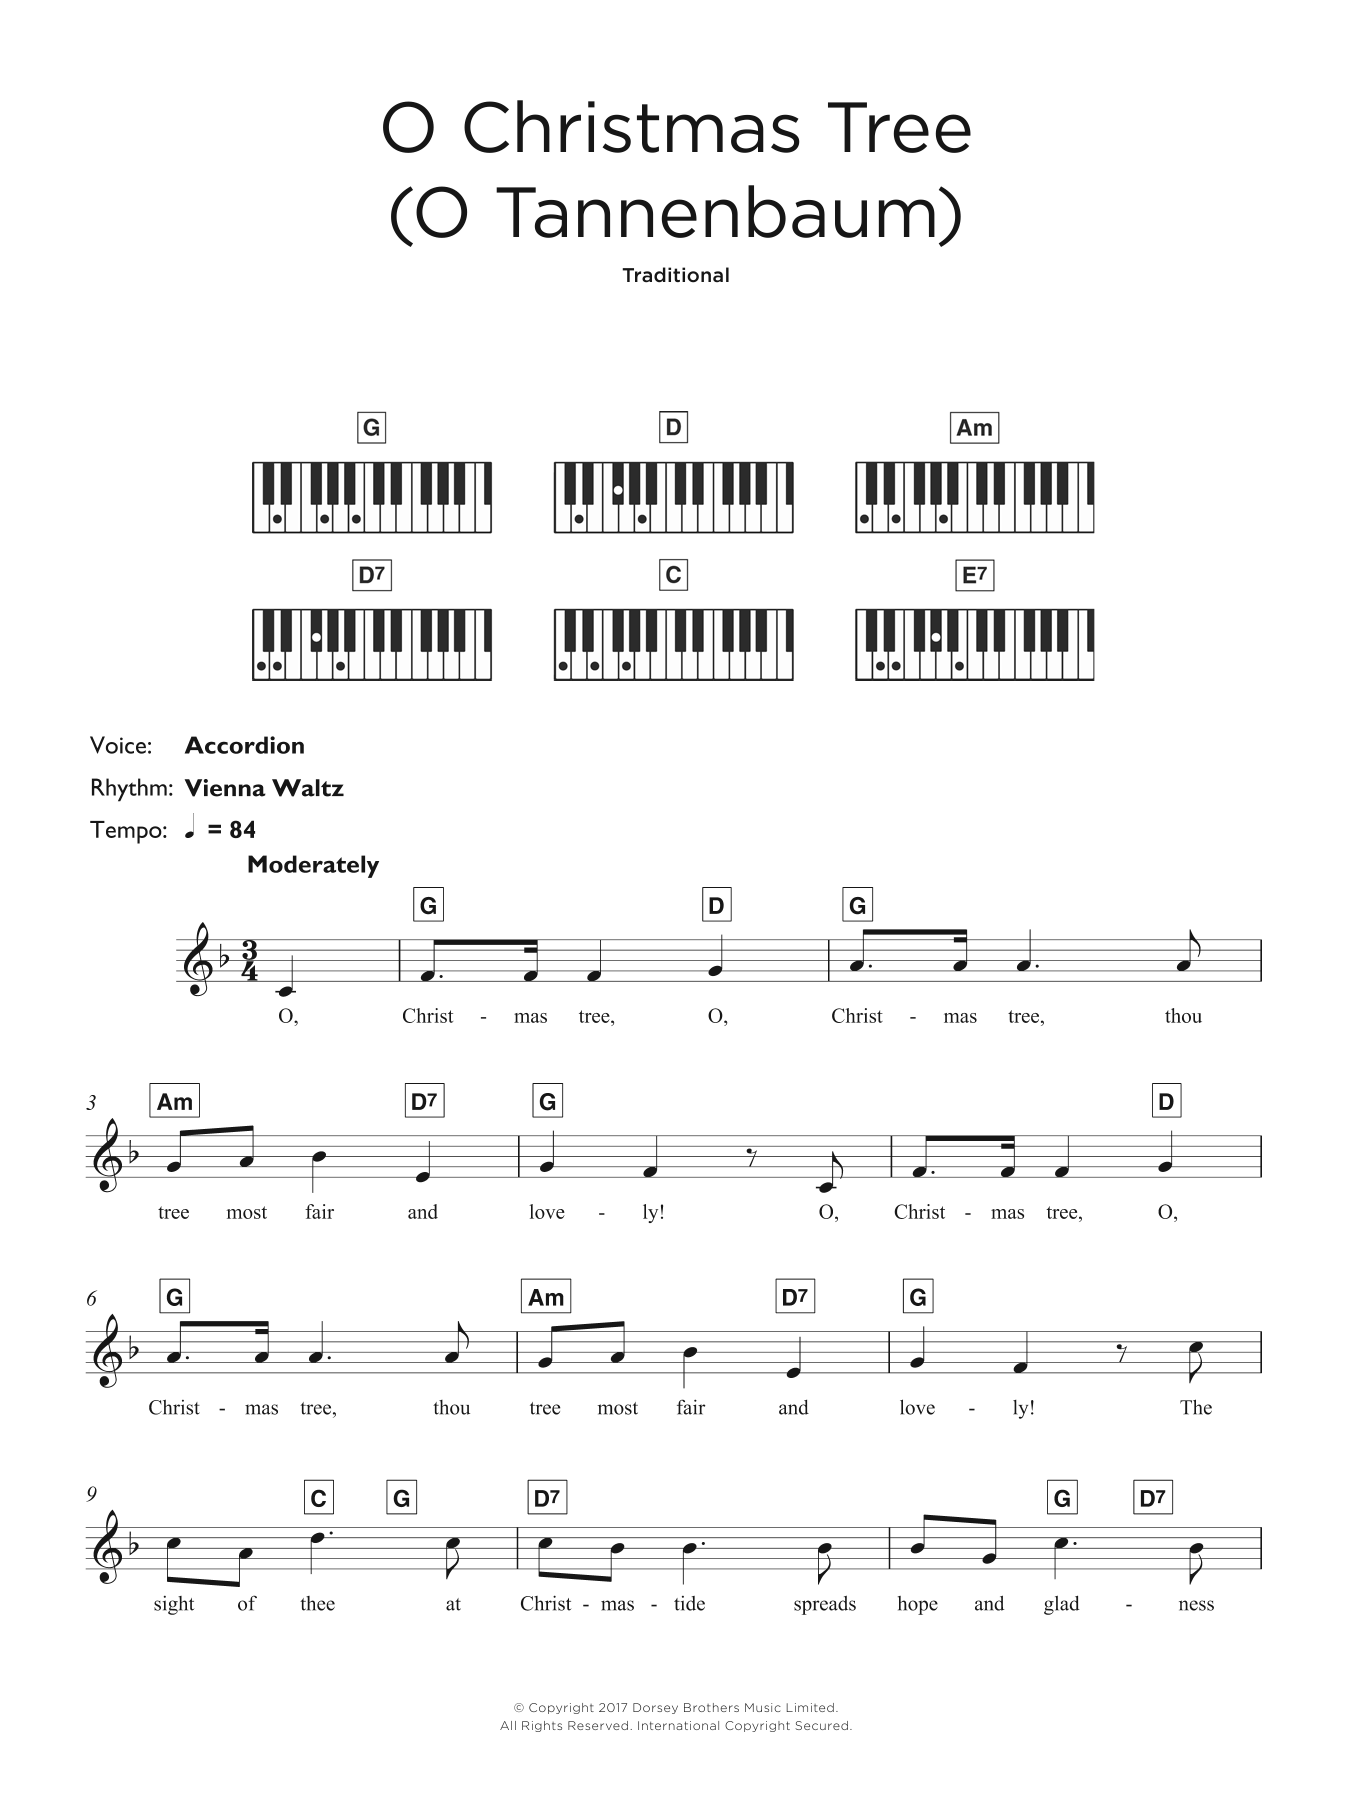 Christmas Carol O Christmas Tree (O Tannenbaum) Sheet Music Notes & Chords for Lyrics & Chords - Download or Print PDF